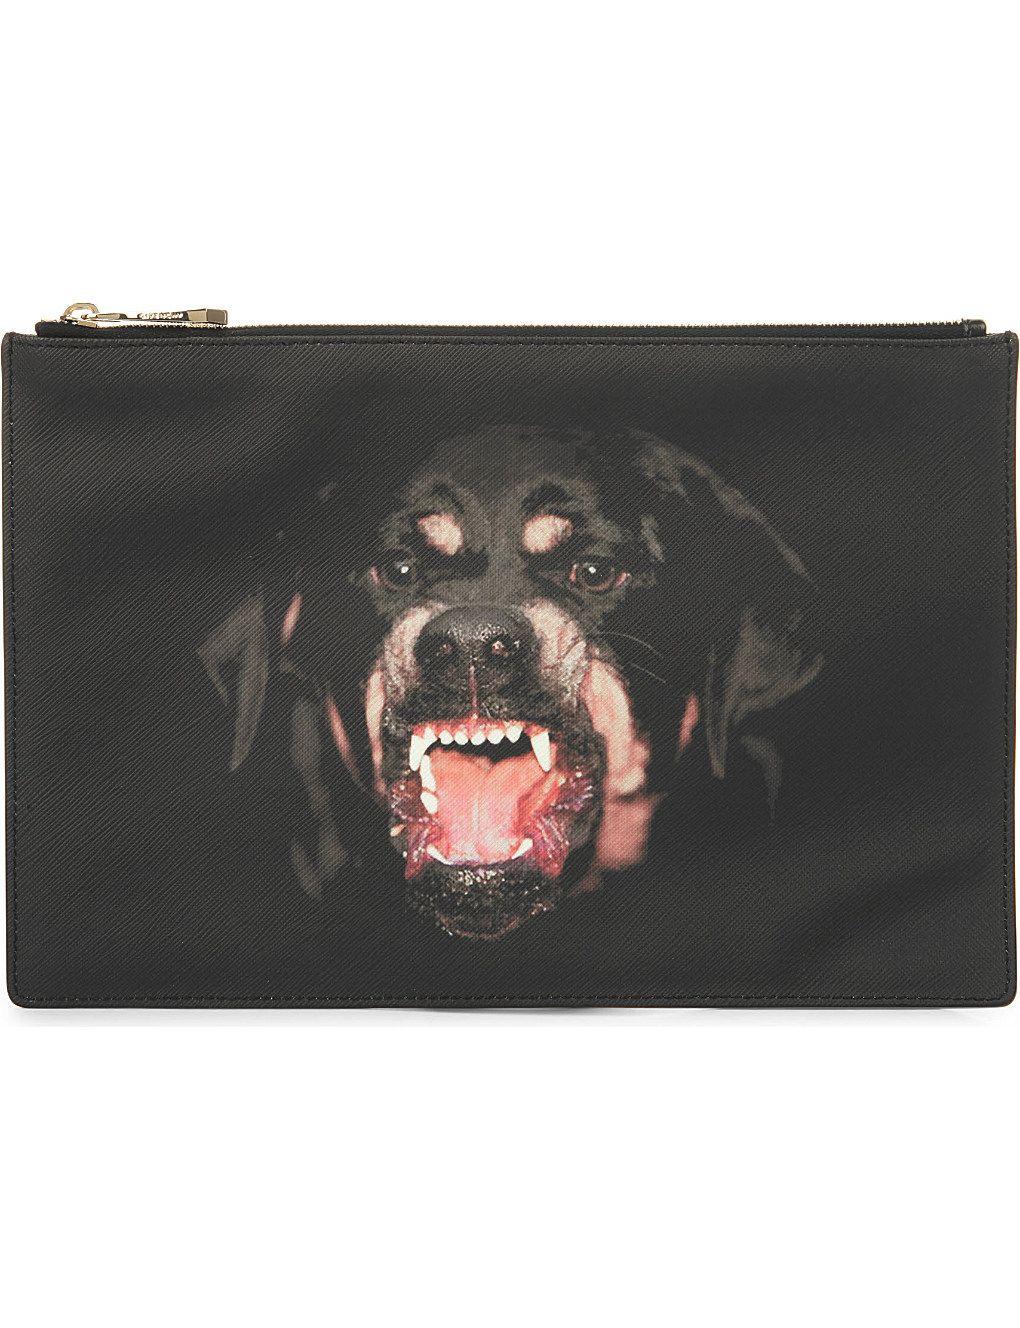 Givenchy Rottweiler Logo - GIVENCHY - Rottweiler medium pouch | Selfridges.com